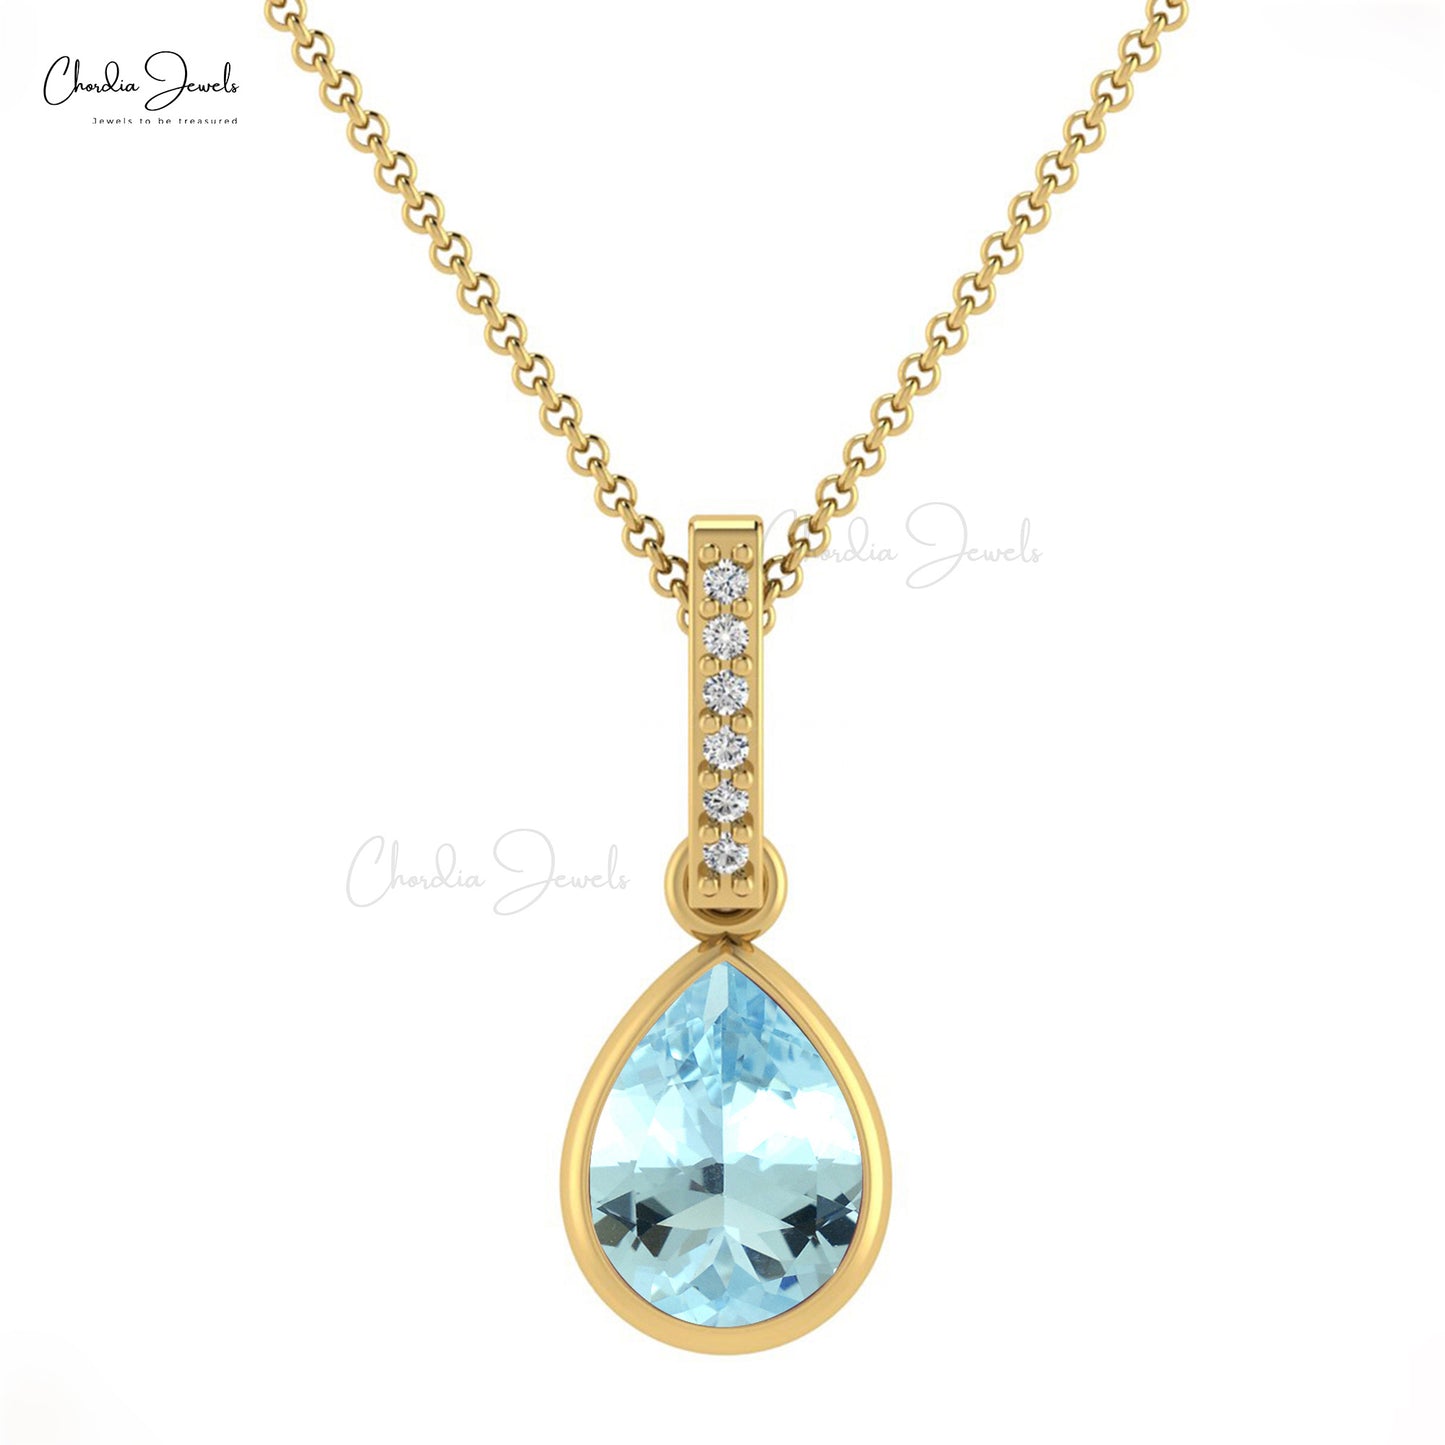 Minimalist Diamond Necklace in White Gold | KLENOTA